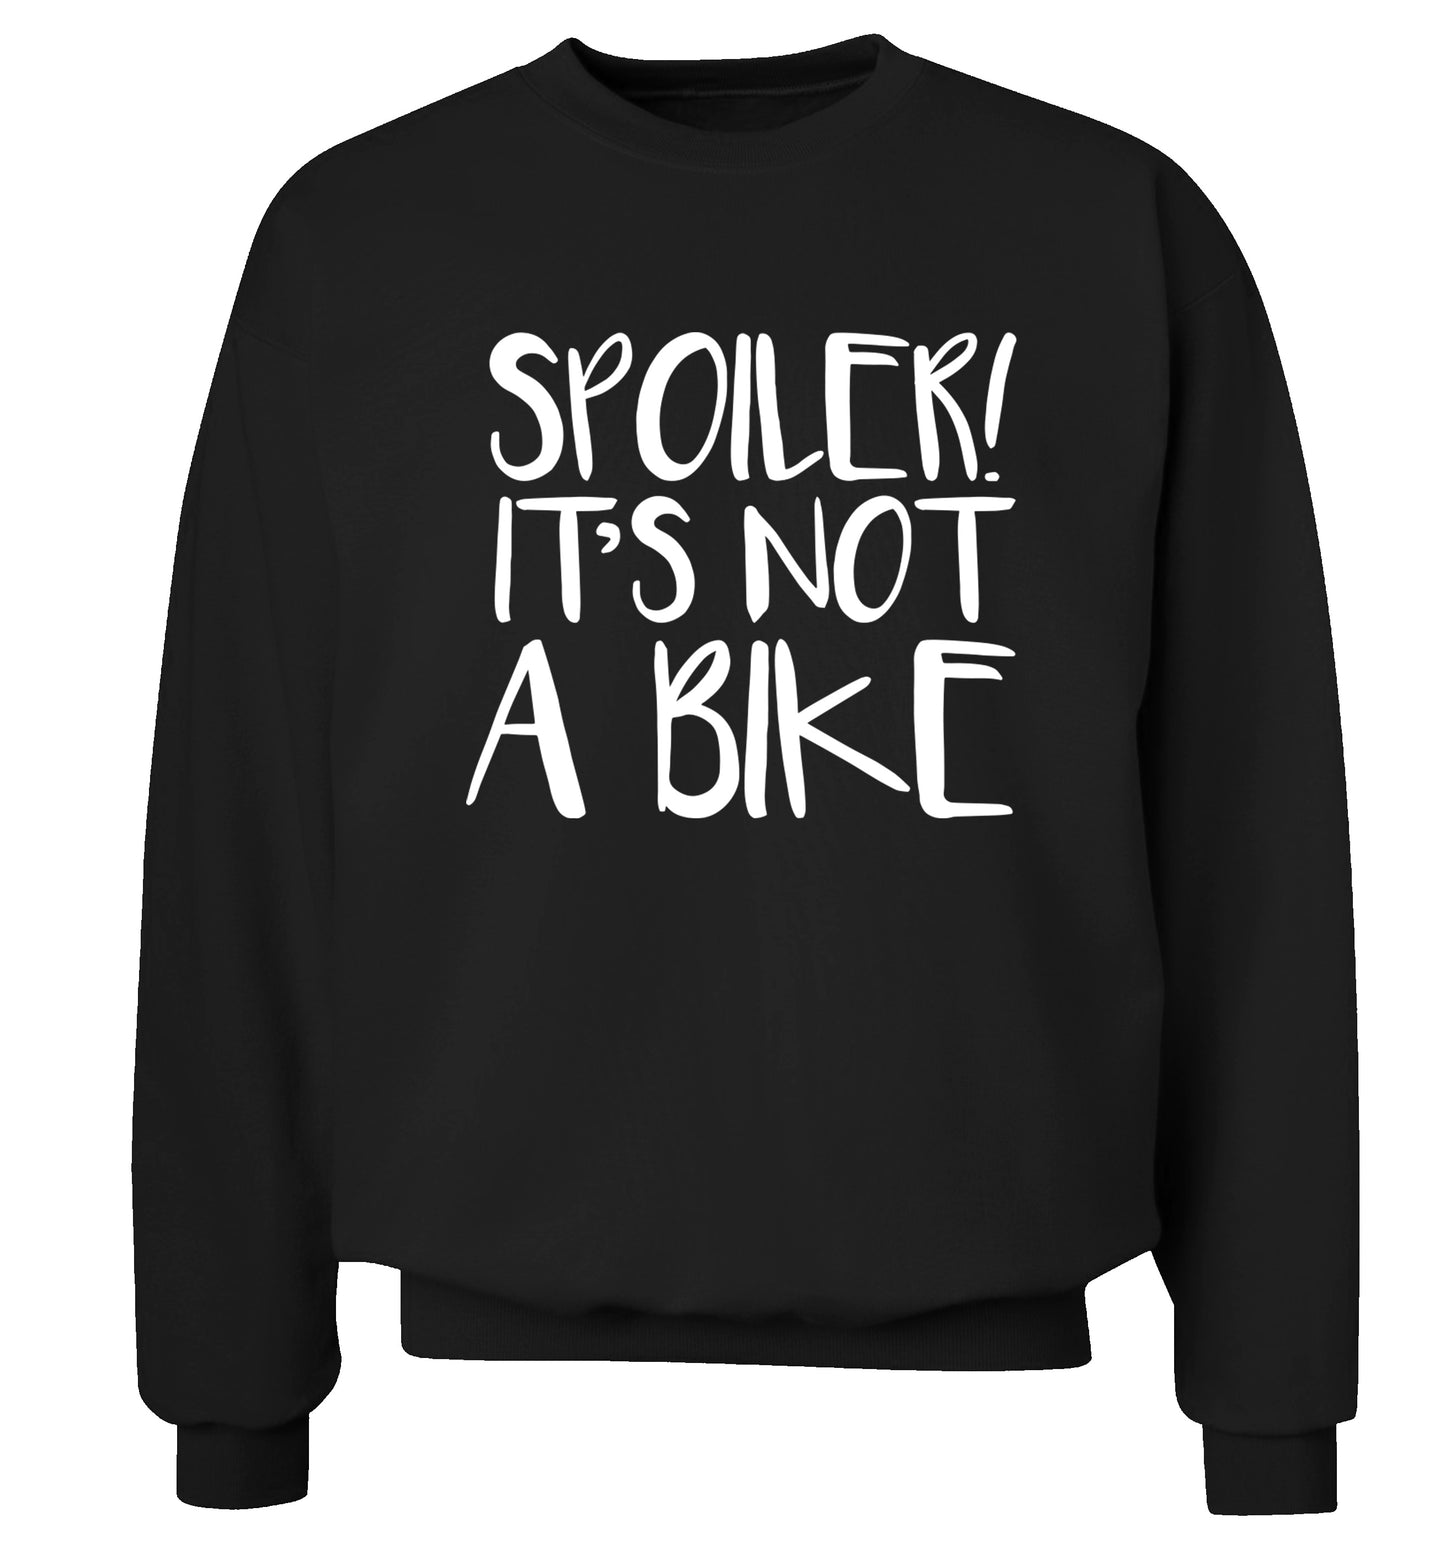 Spoiler it's not a bike Adult's unisex black Sweater 2XL